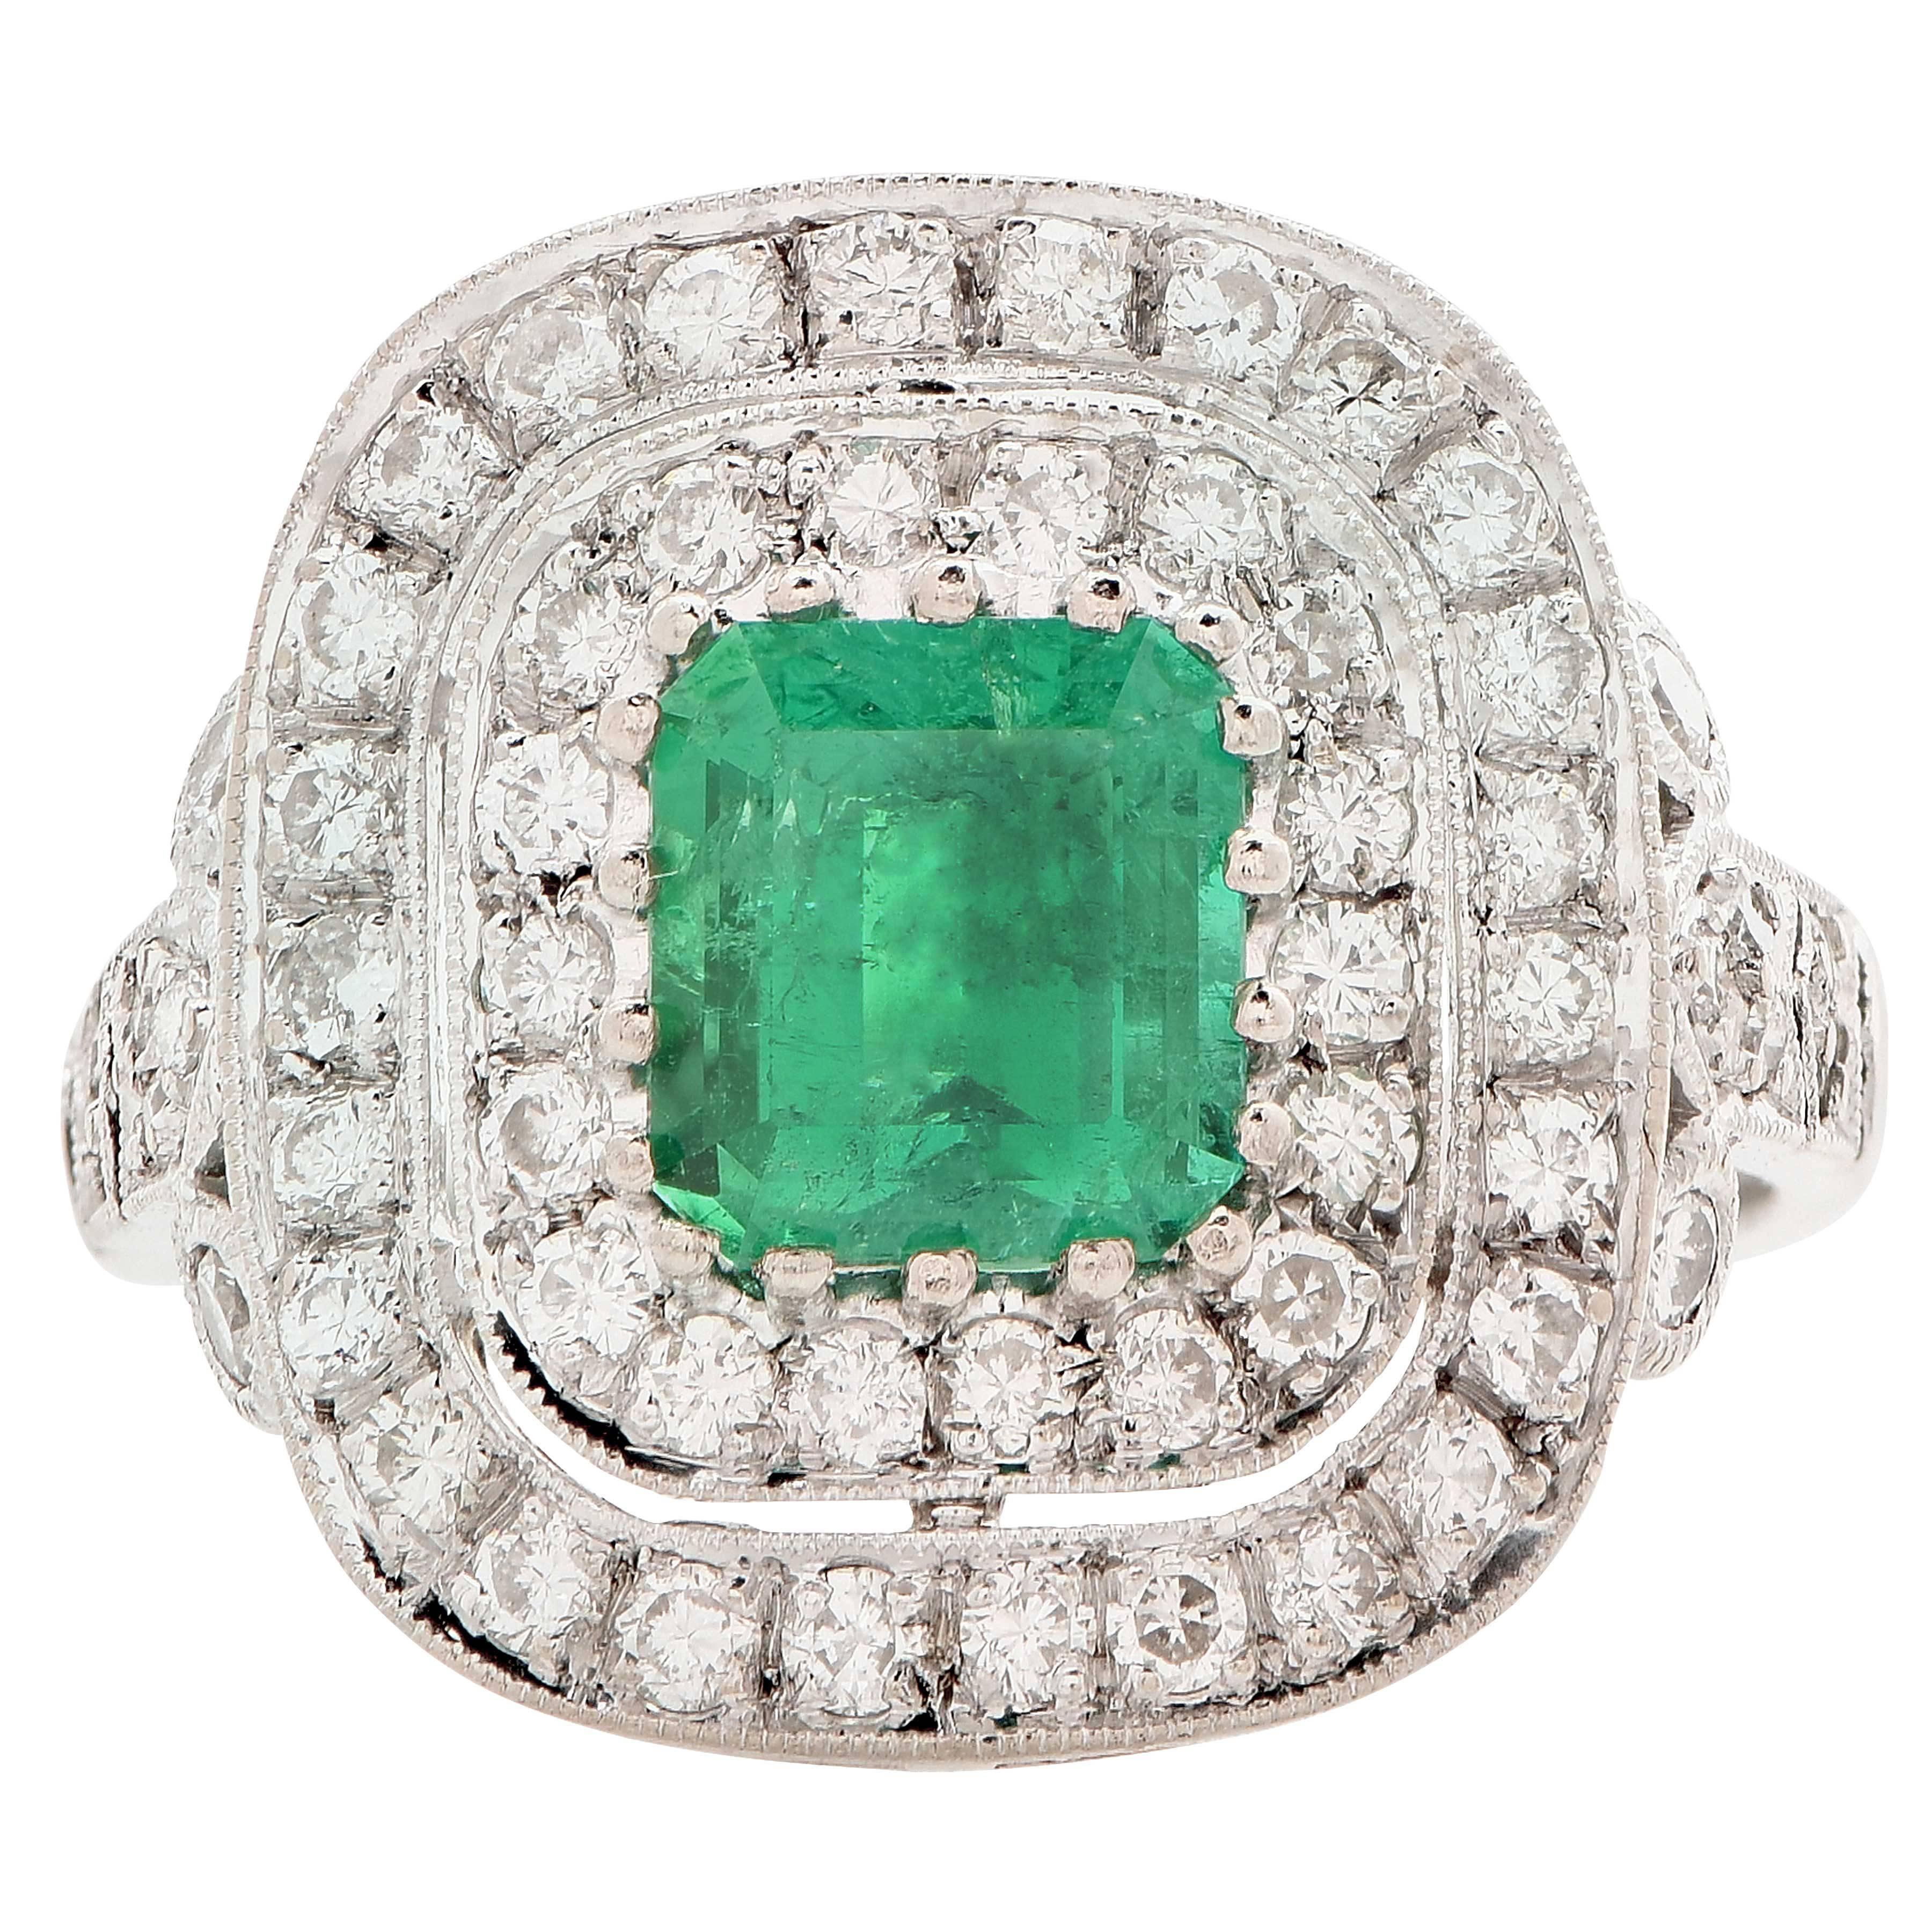 1.5 carat emerald ring